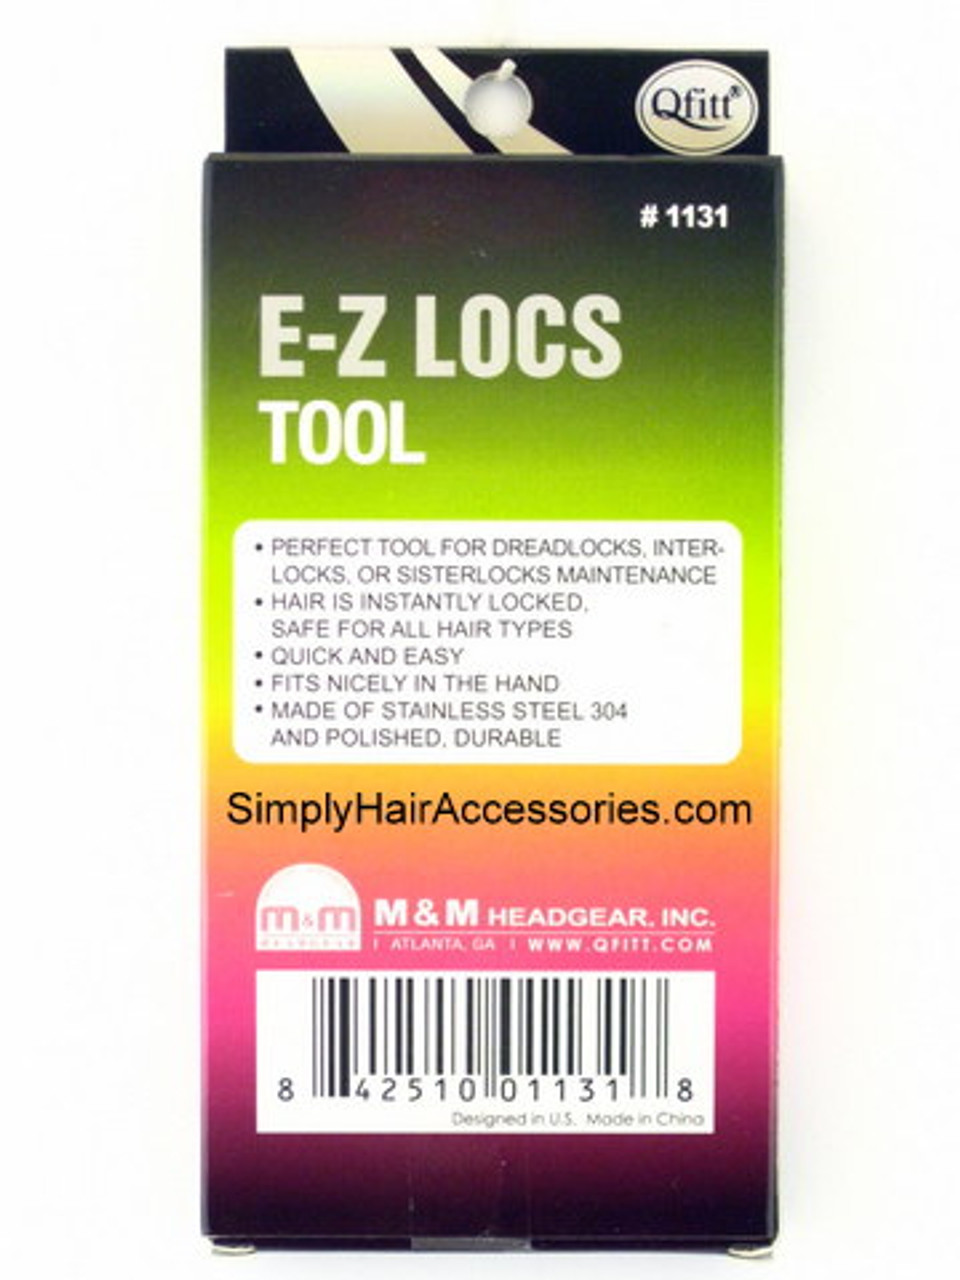 Qfitt E-Z Locs Tool For Dreadlocks, Interlocks & Sisterlocks - 1 Pc.